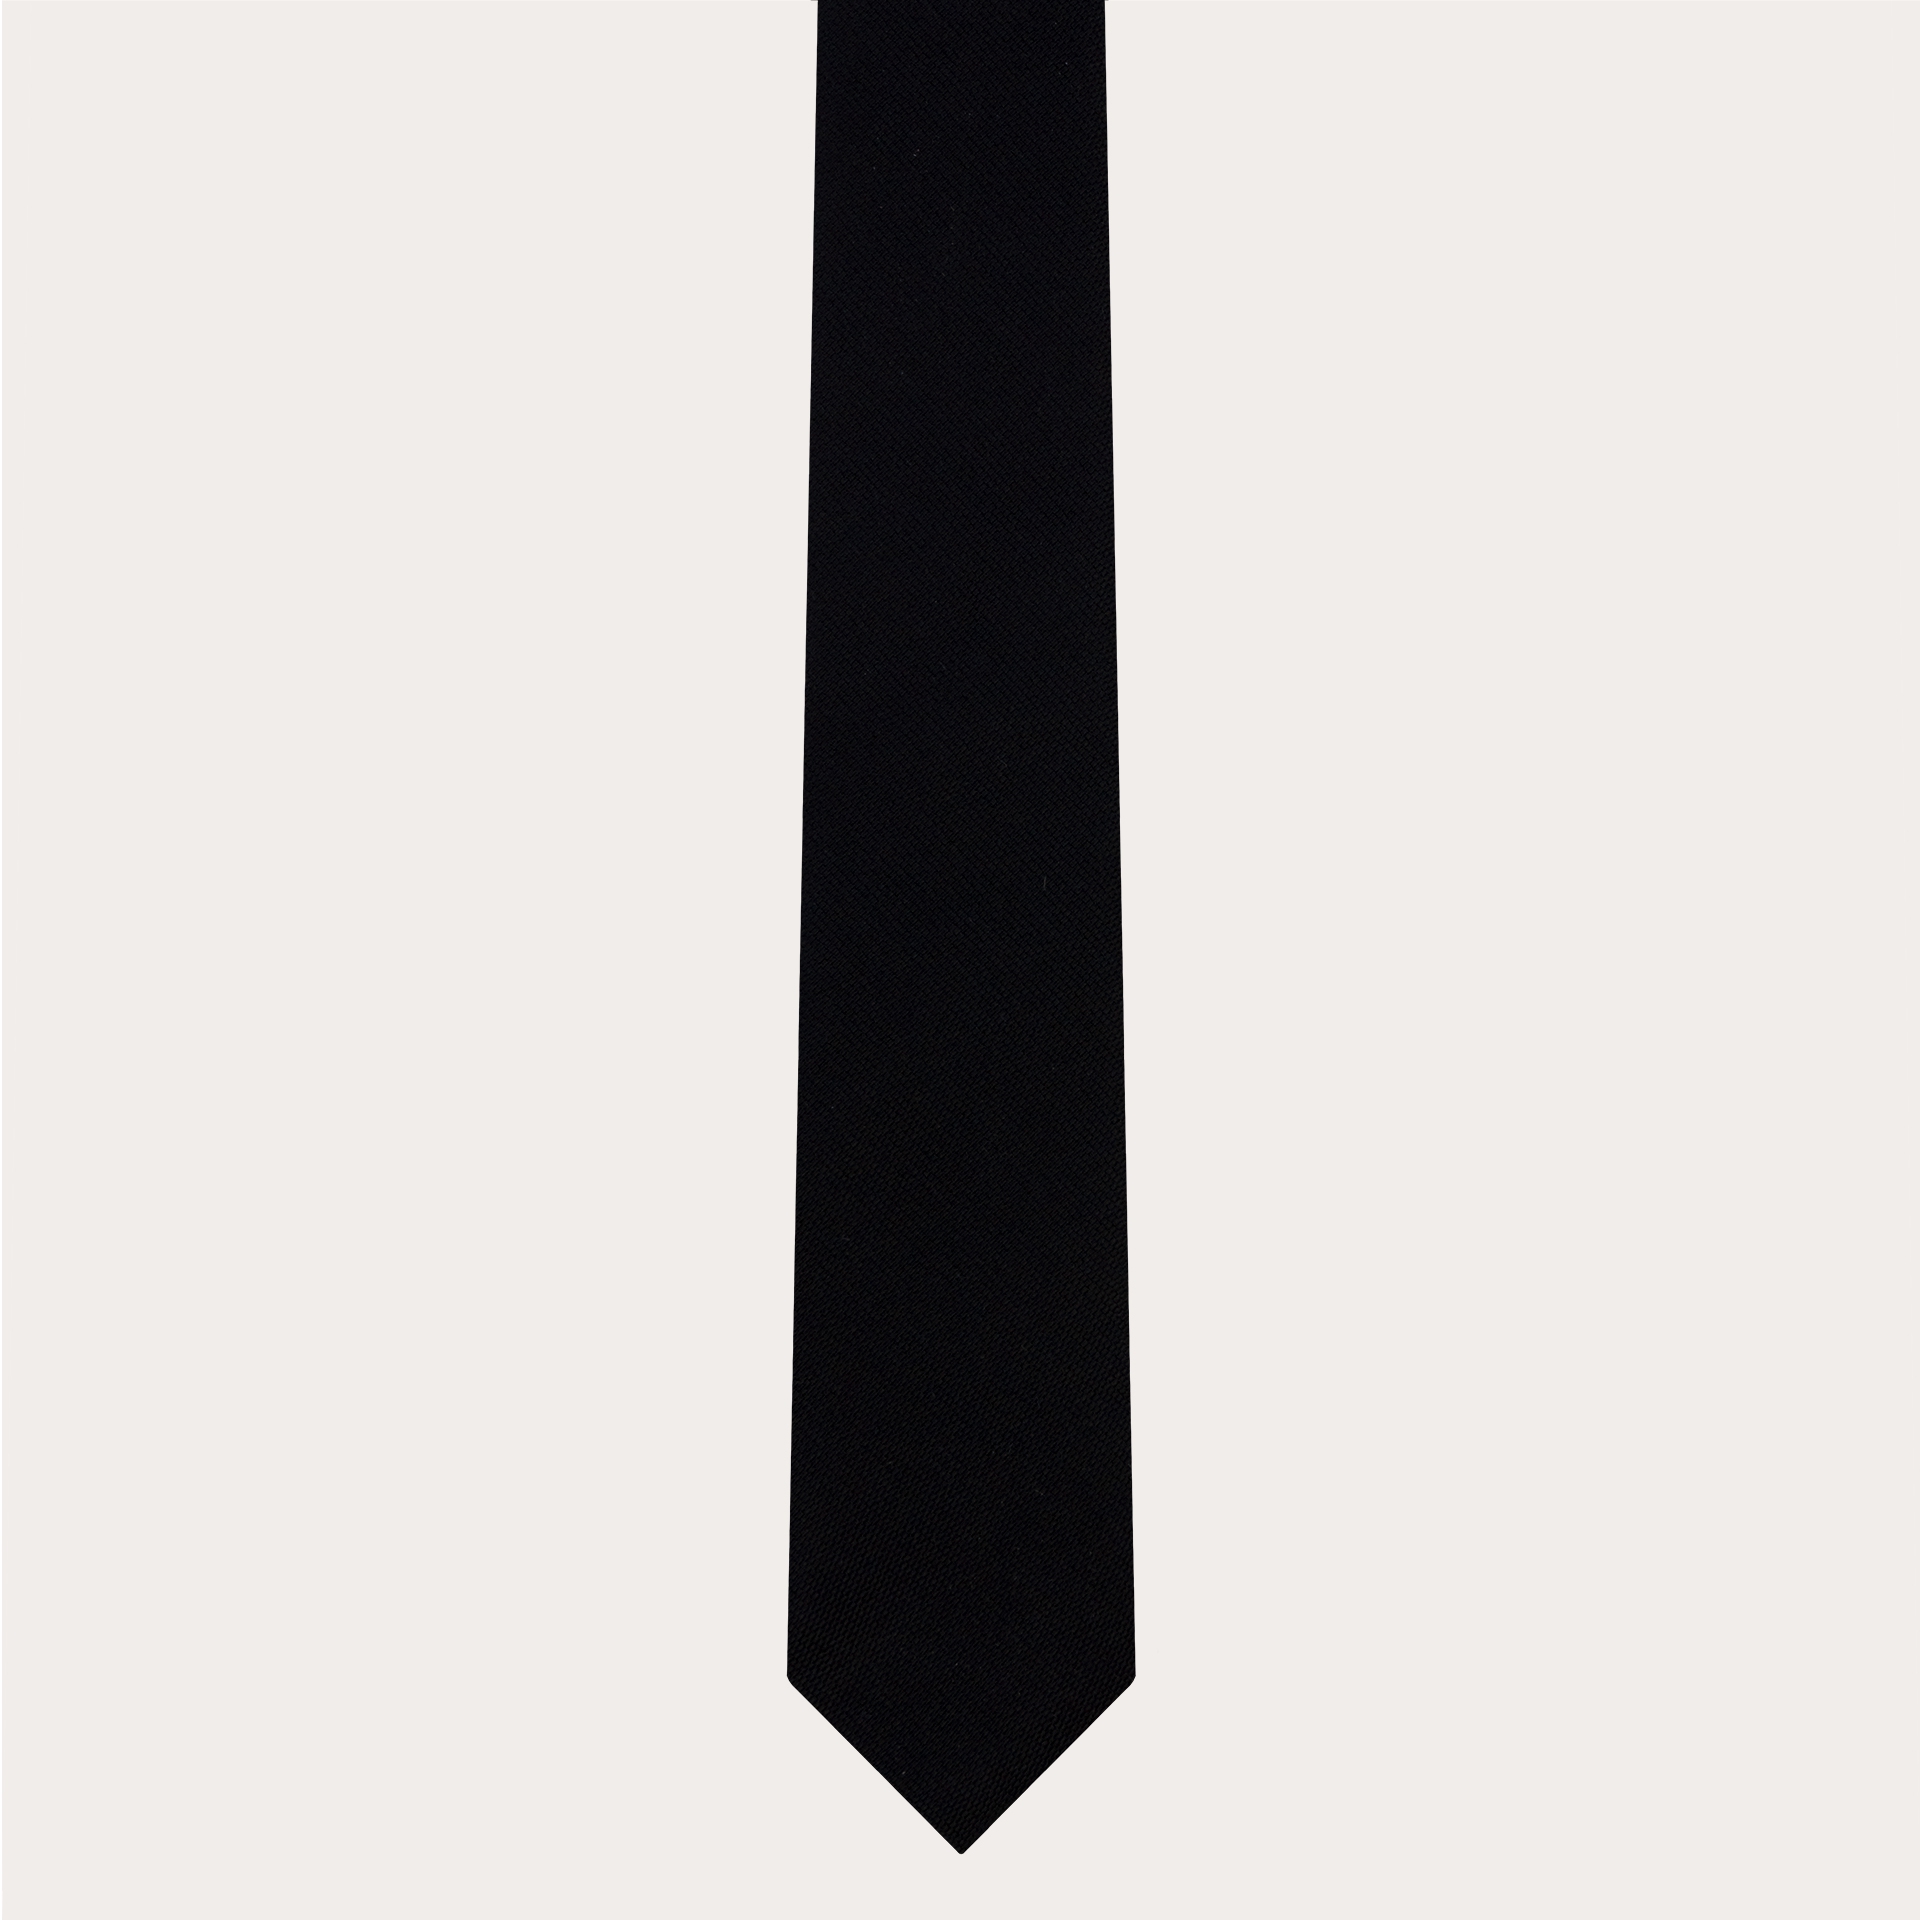 Classic thin necktie in pure silk, black